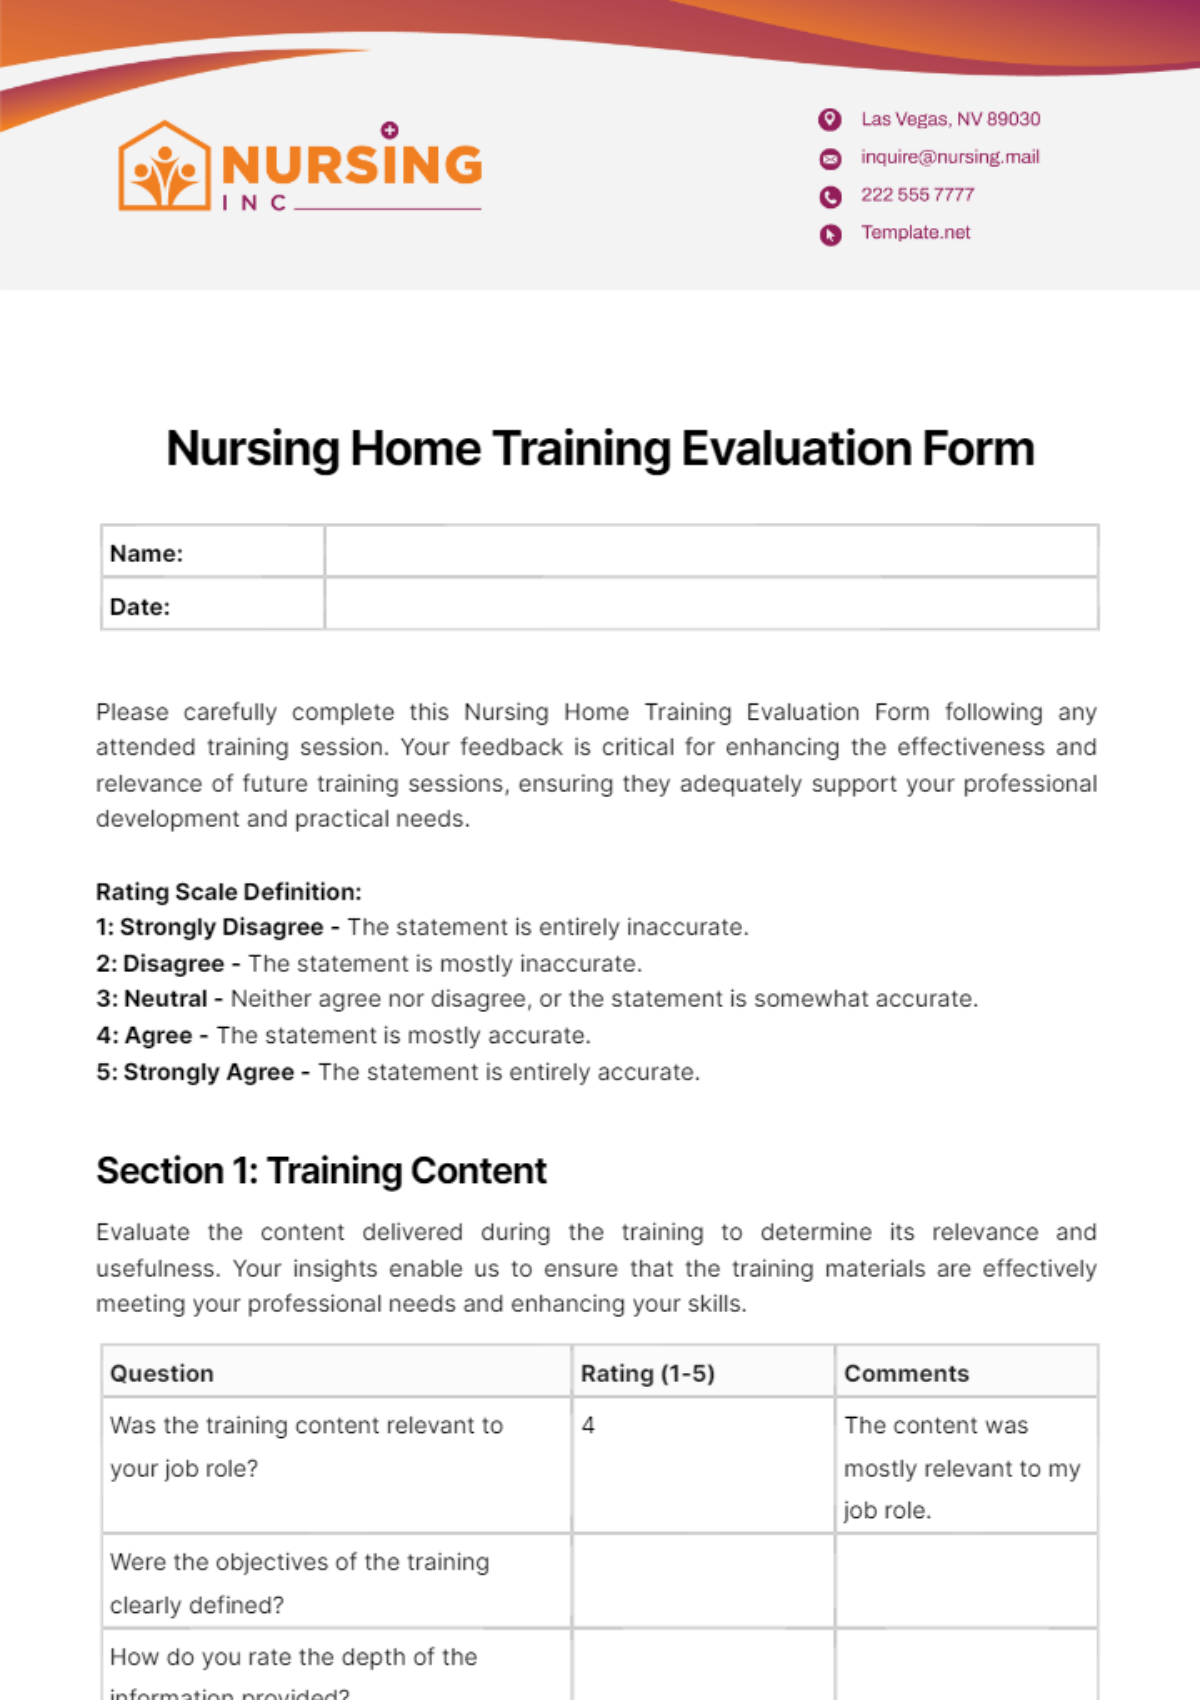 Nursing Home Training Evaluation Form Template